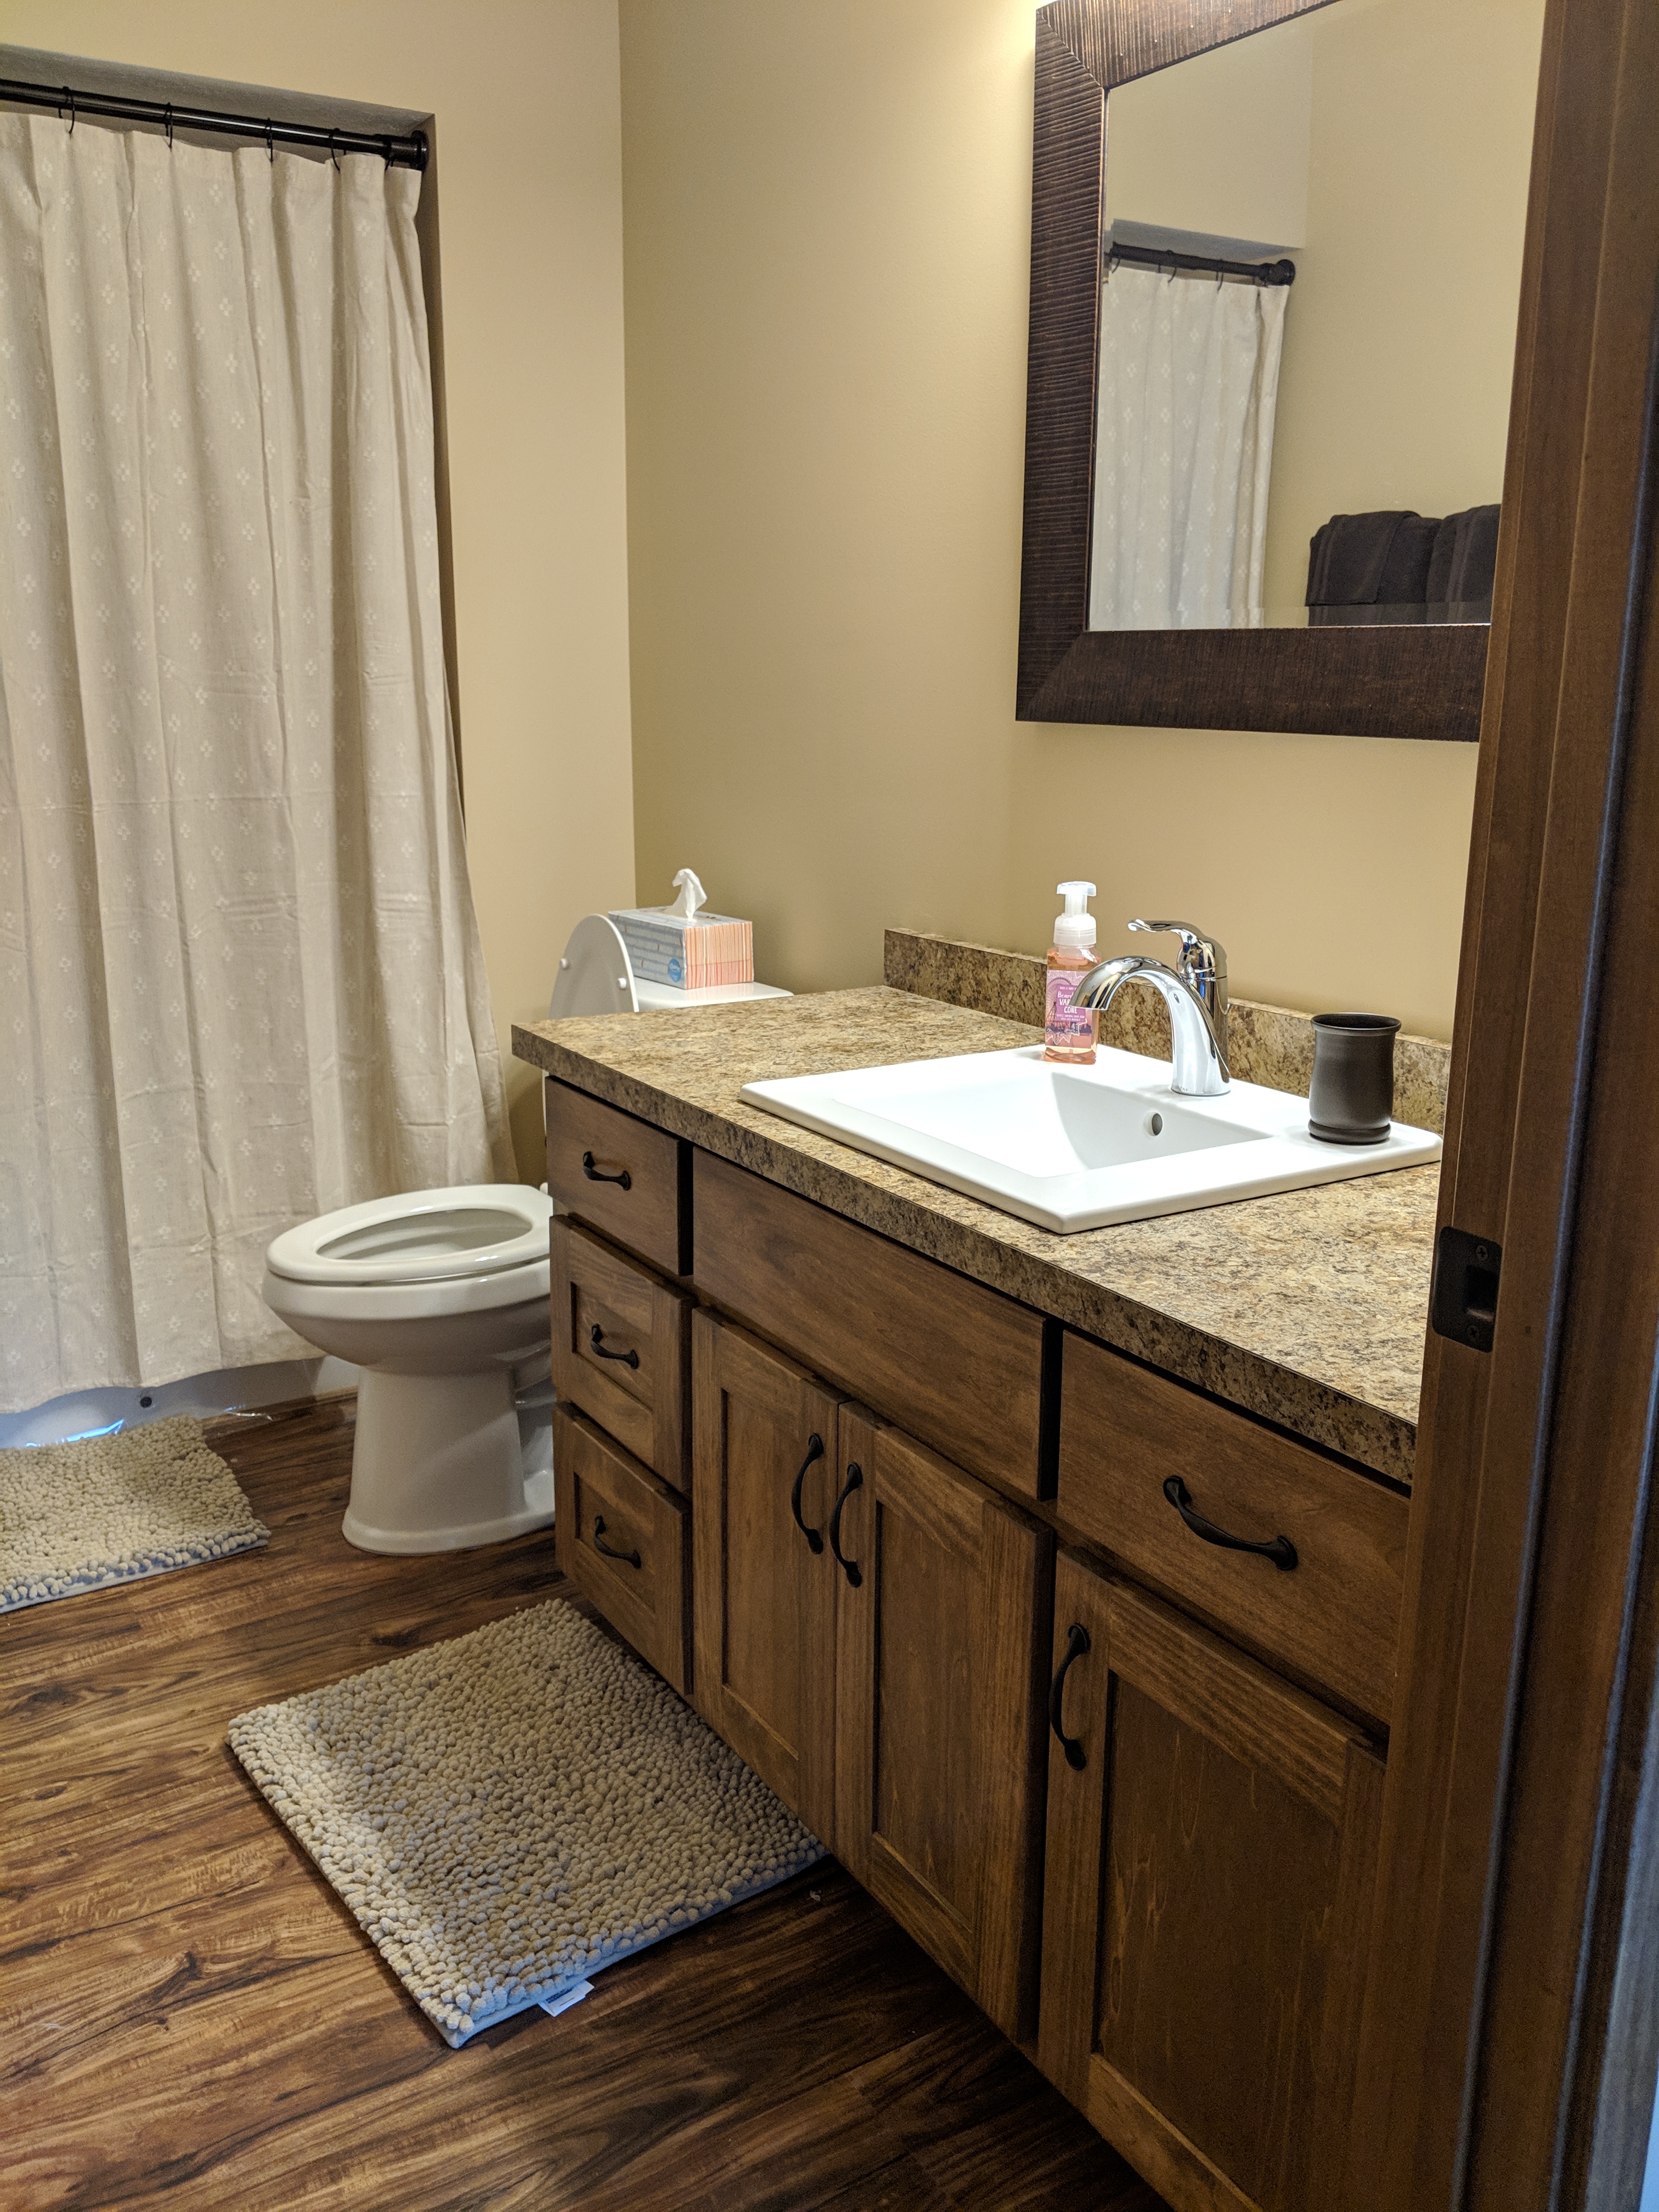 Bathroom finish poplar millwork & vanity cabinets